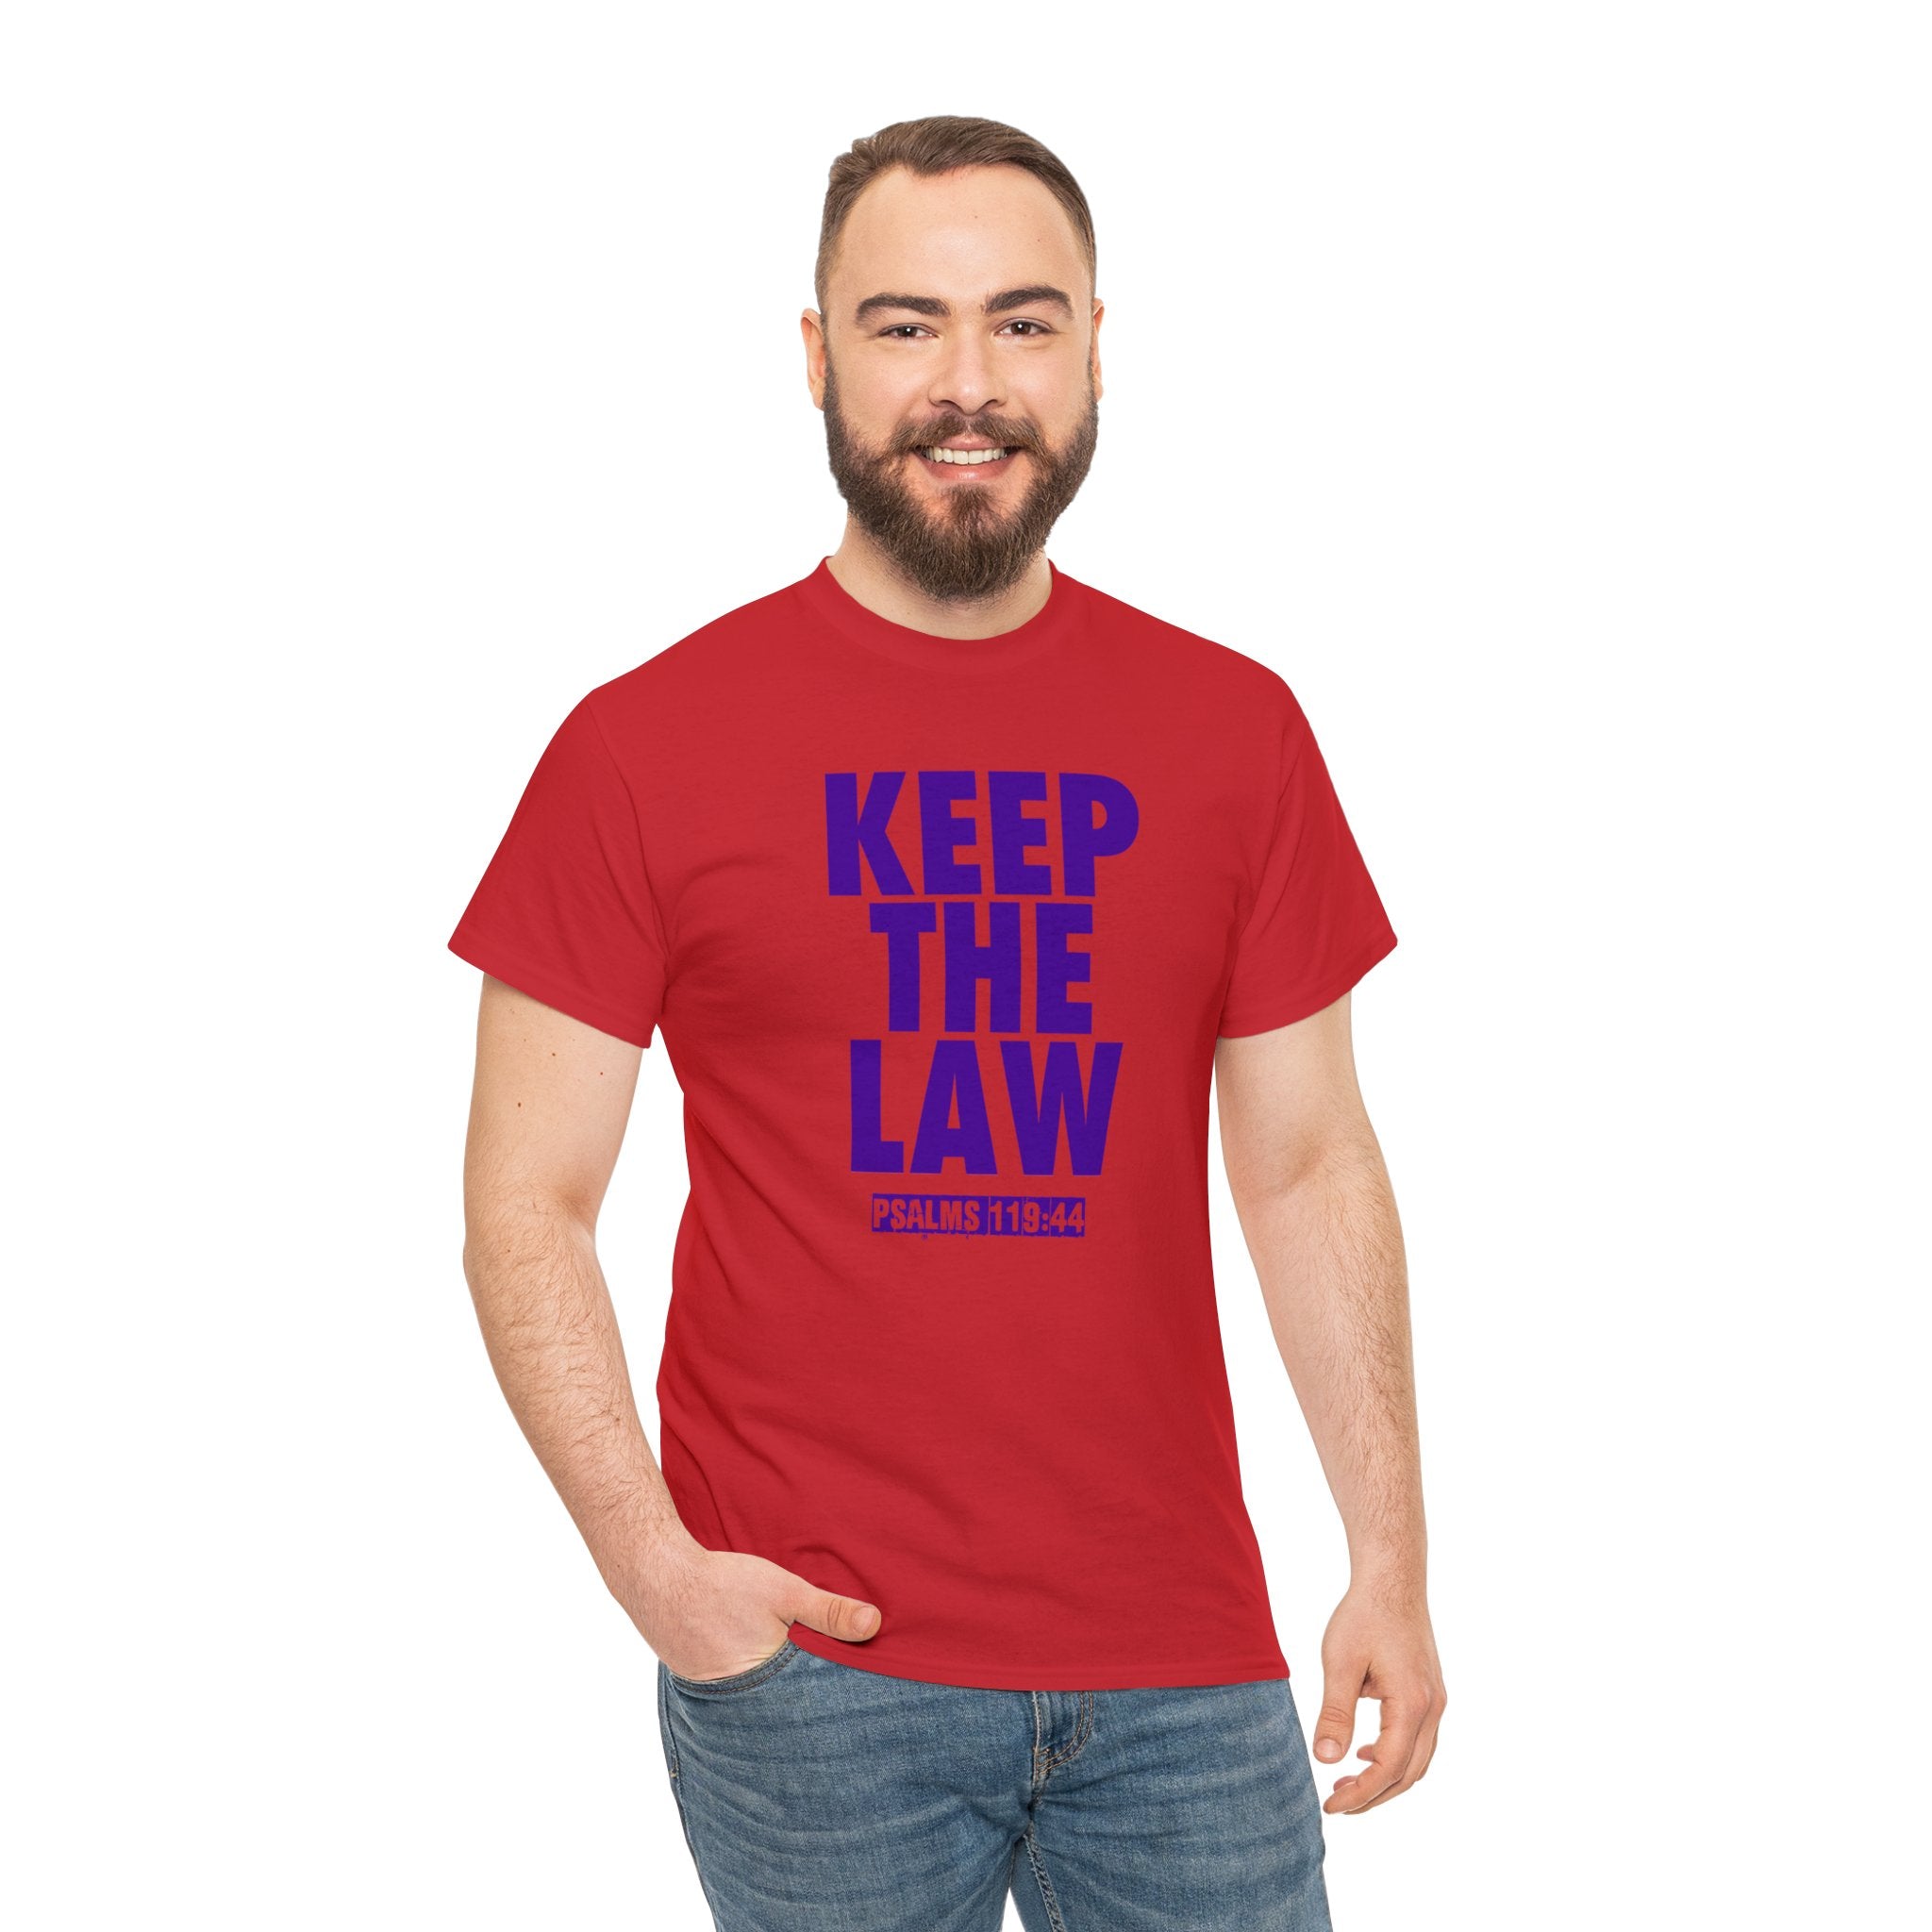 KEEP THE LAW PURPLE